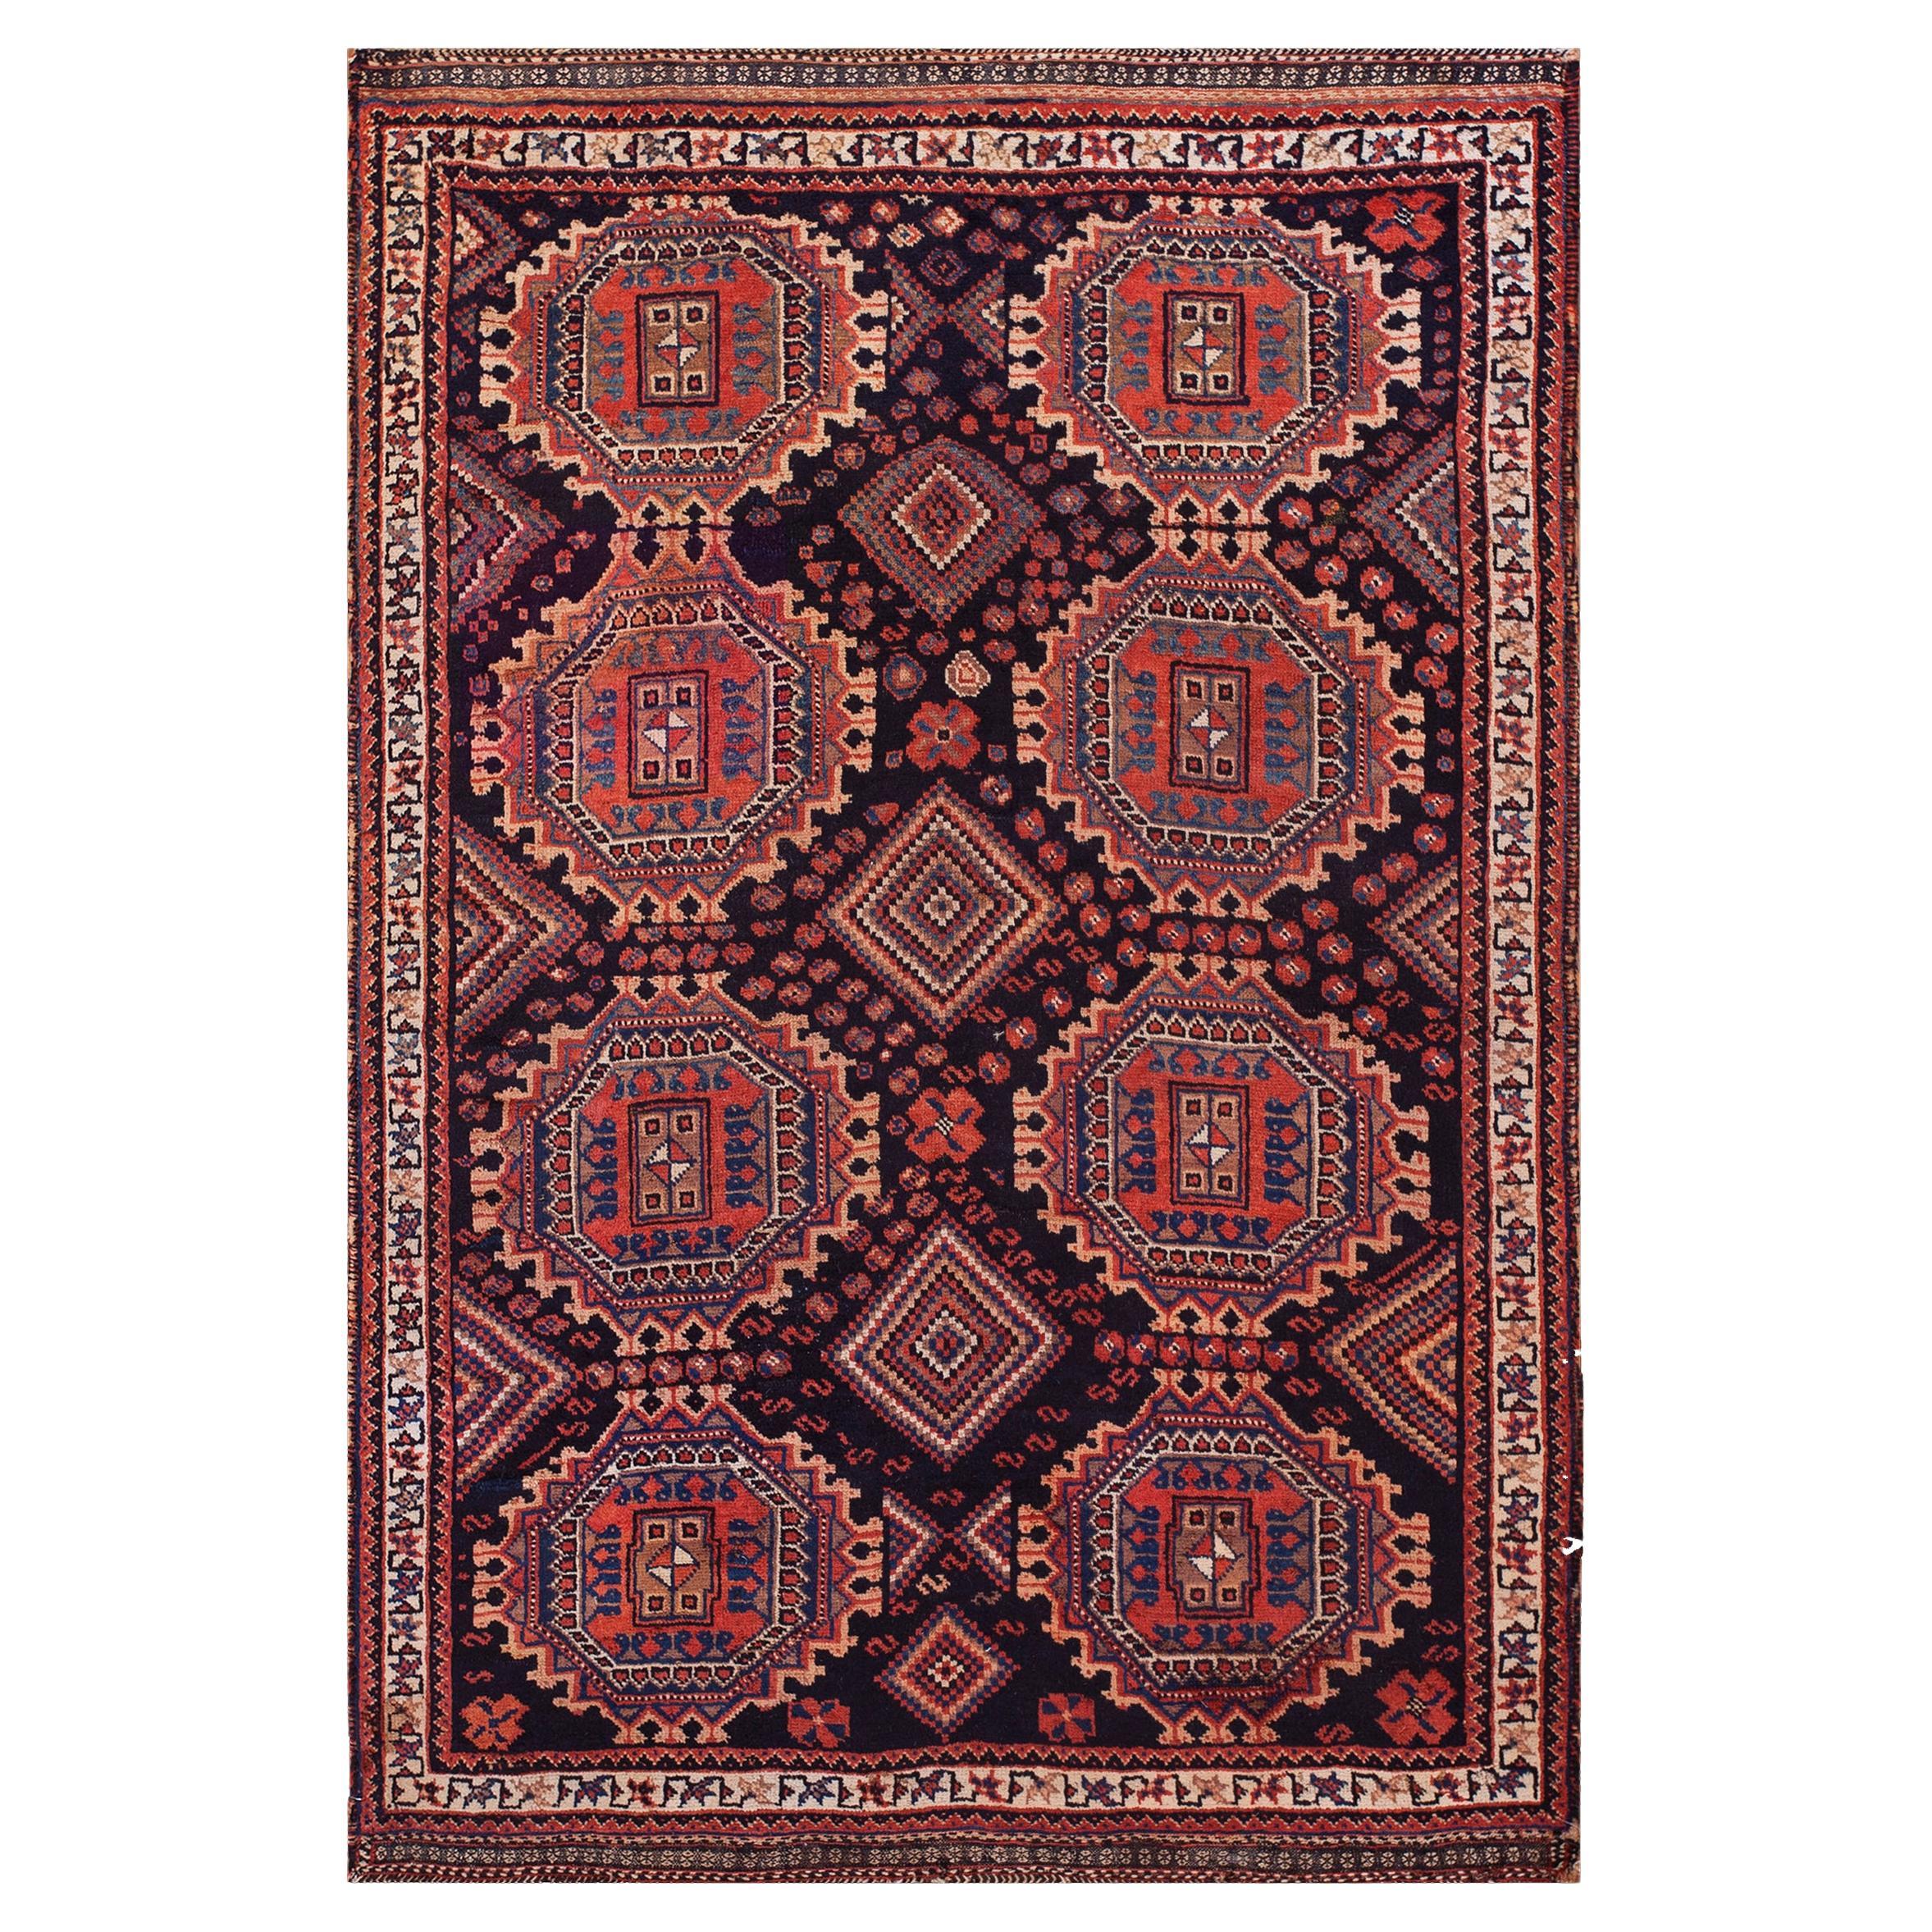 Early 20th Century S.E. Persian Afshar Carpet ( 4'6" x 6'6" - 137 x 198 )